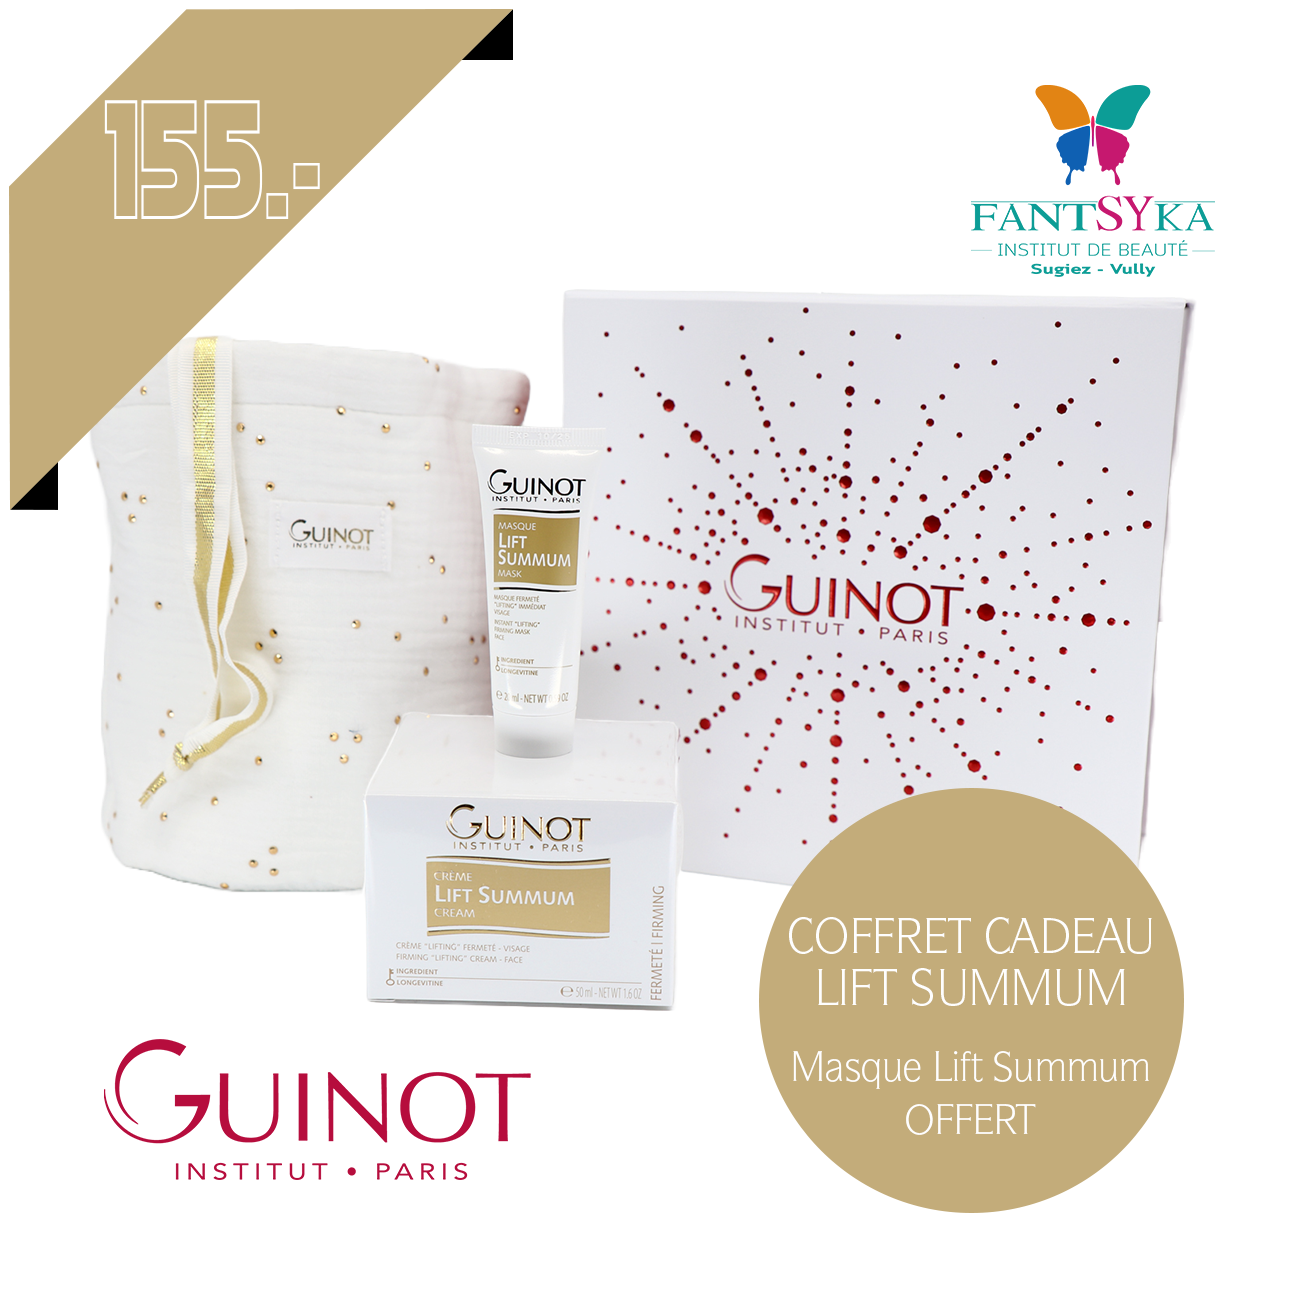 ☆ GUINOT Coffret Cadeau Crème LIFT SUMMUM + Masque Lift Summum GRATIS |  FANTSYKA